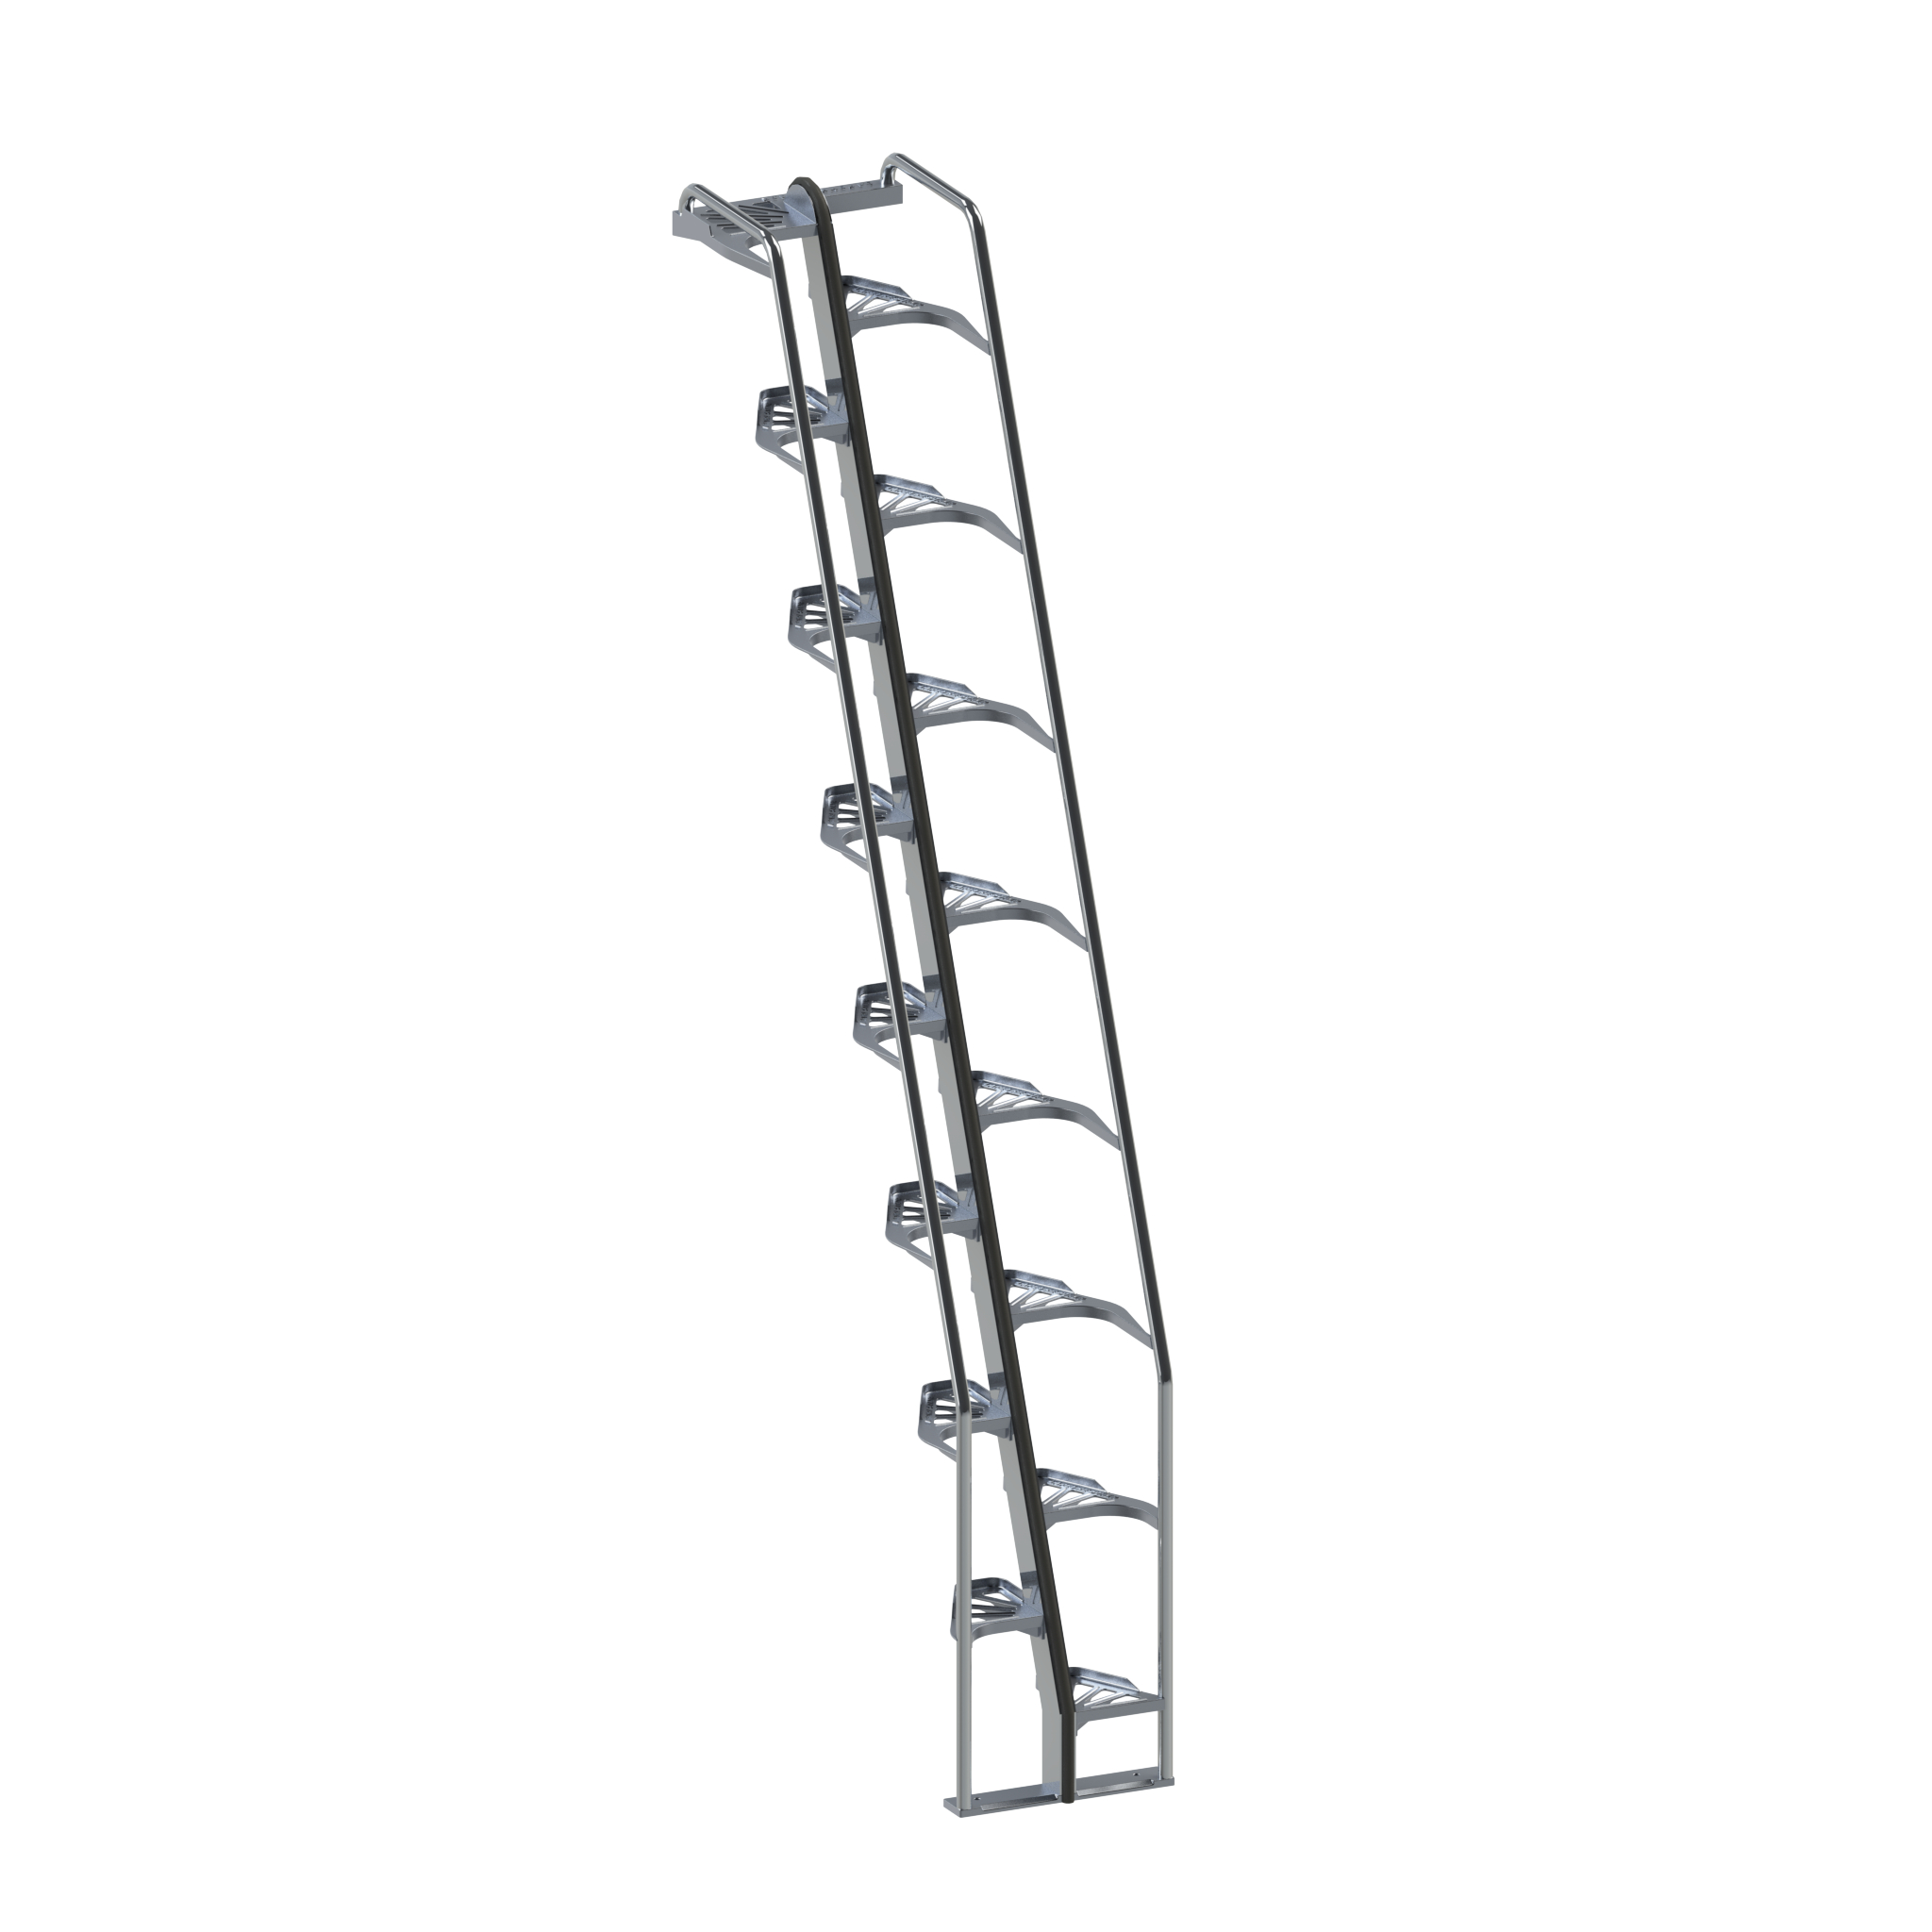 Alternating Tread Stair, Aluminum, 68 Degree, Optional Handrail